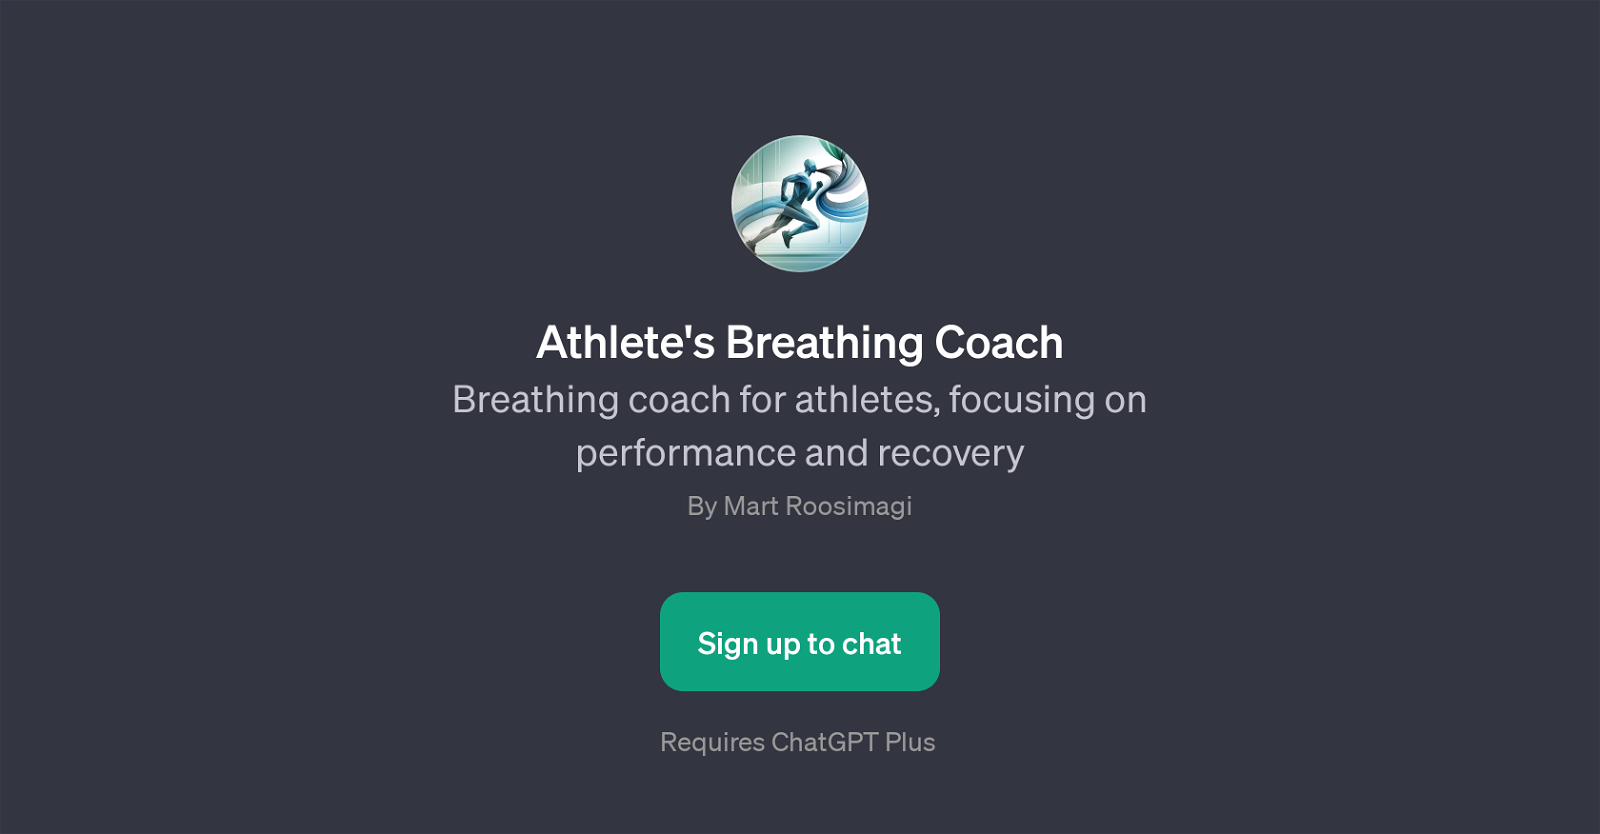 Athlete's Breathing Coach website